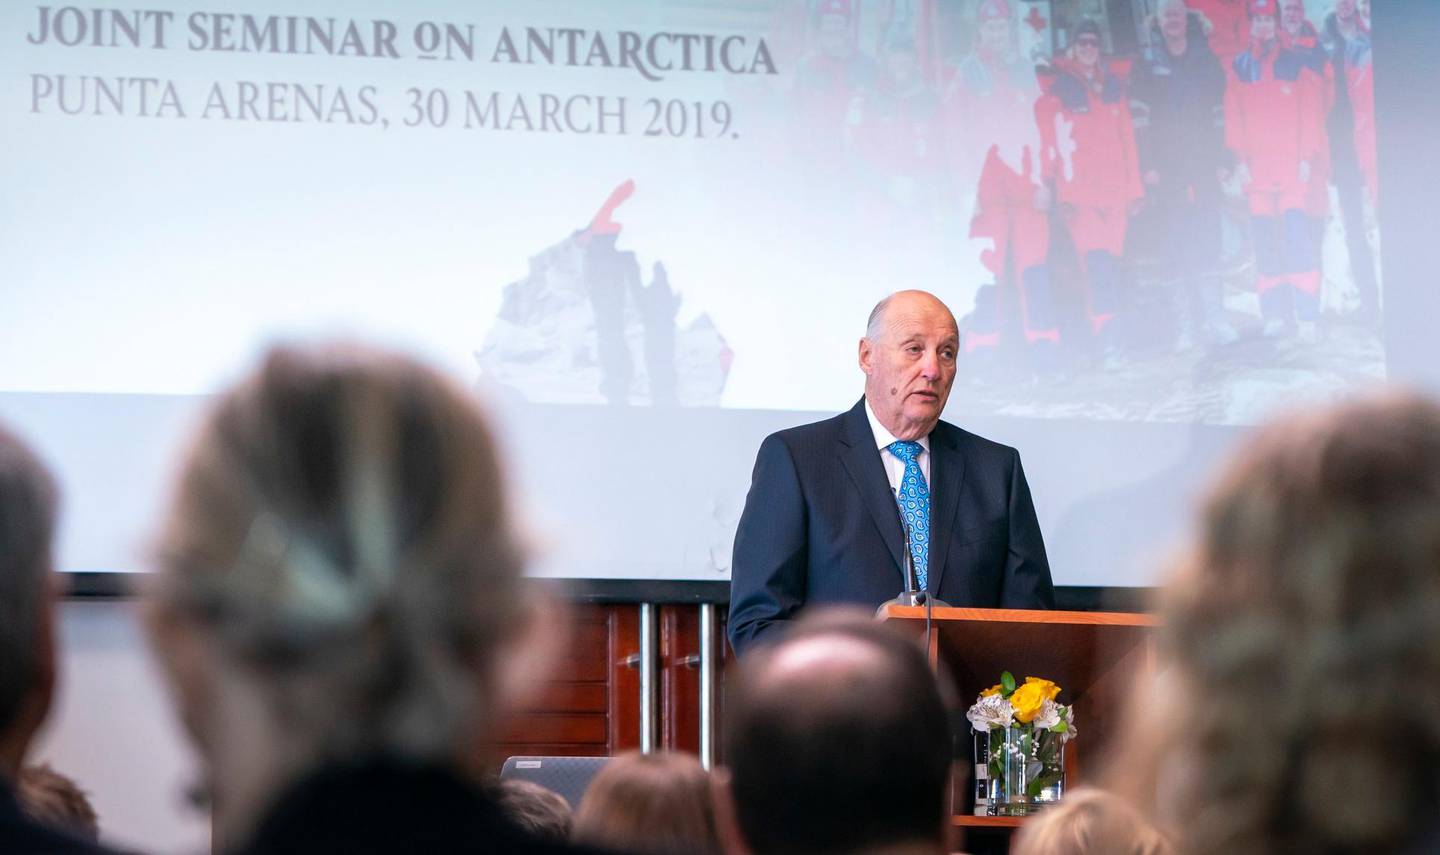 Punta Arenas, Chile 20190330.
Kong Harald åpner et norsk-chilensk Antarktis-seminar i Punta Arenas. 
Foto: Heiko Junge / NTB scanpix